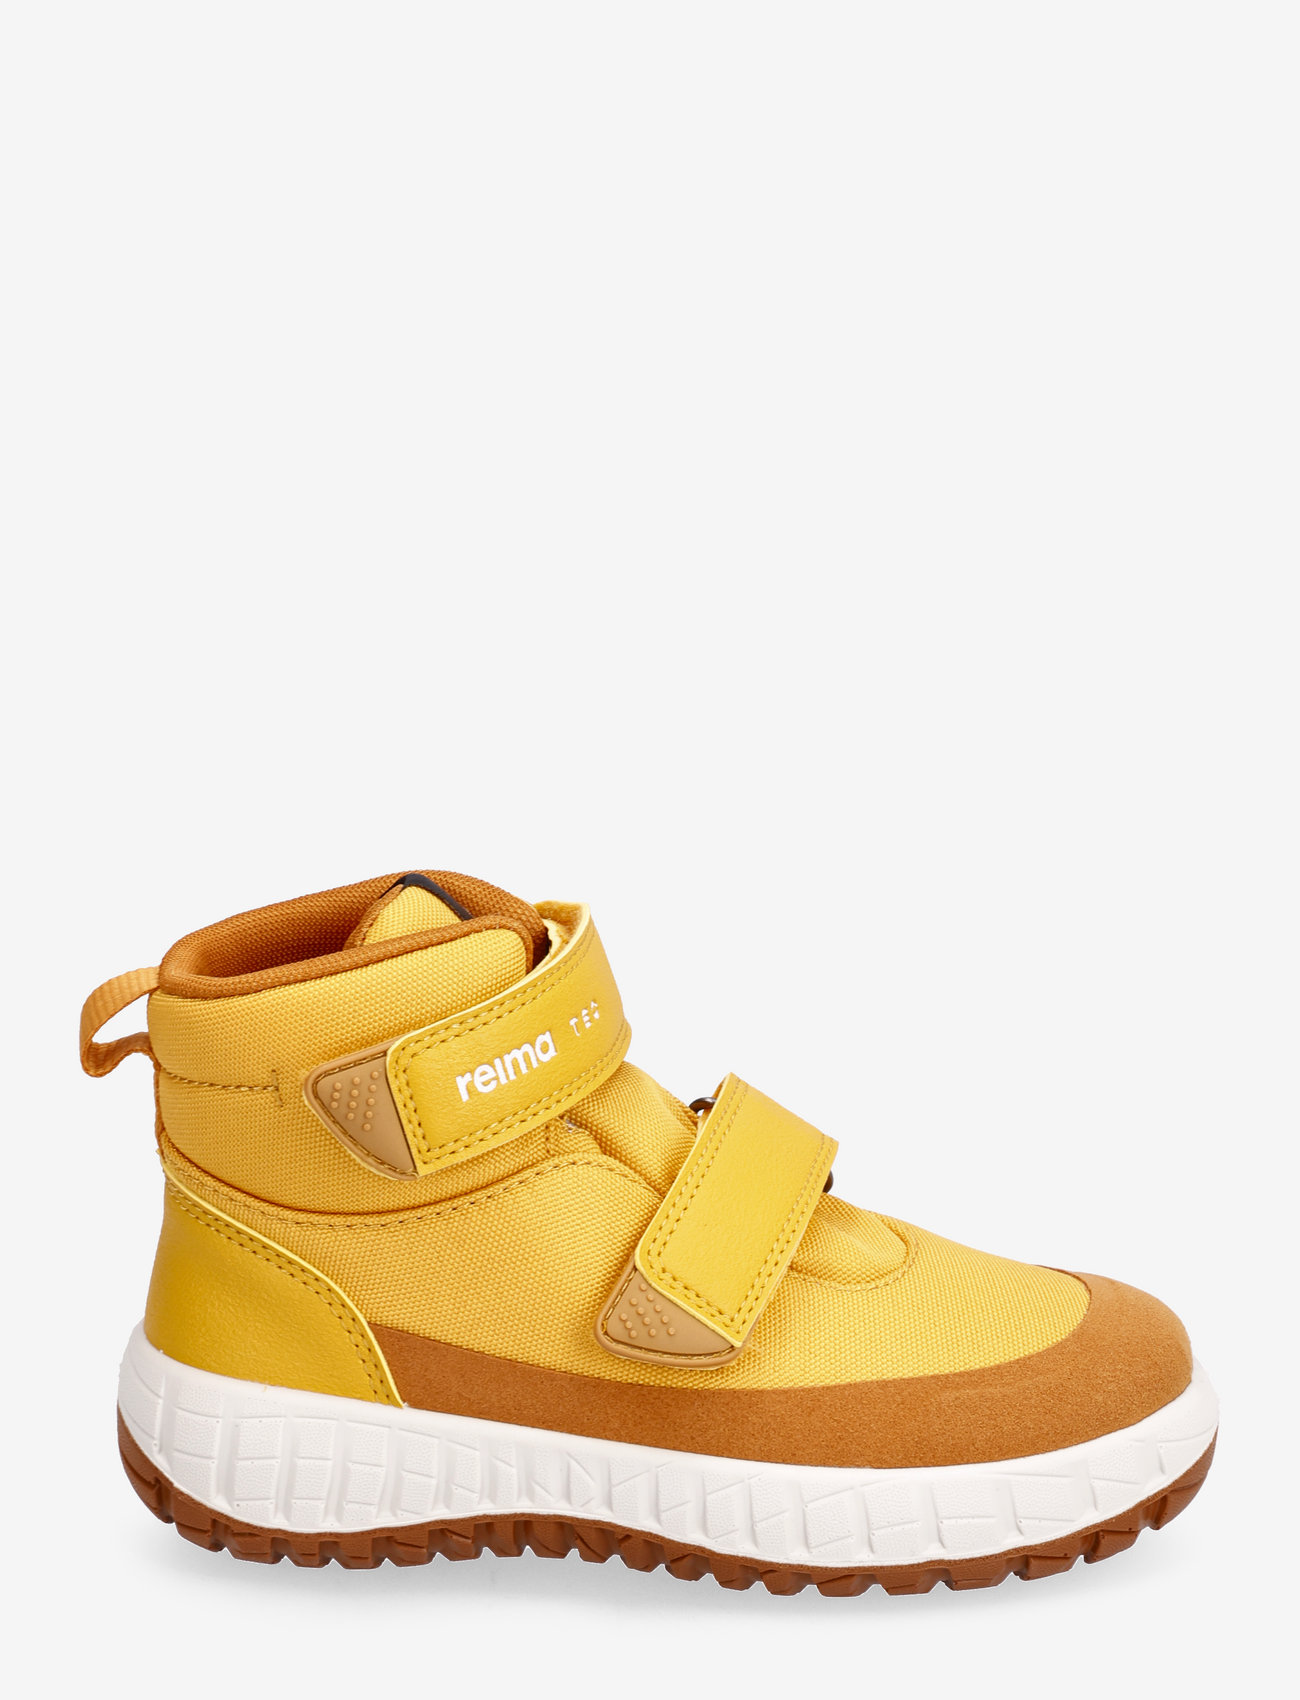 Reima - Reimatec shoes, Patter 2.0 - hoher schnitt - ochre yellow - 1